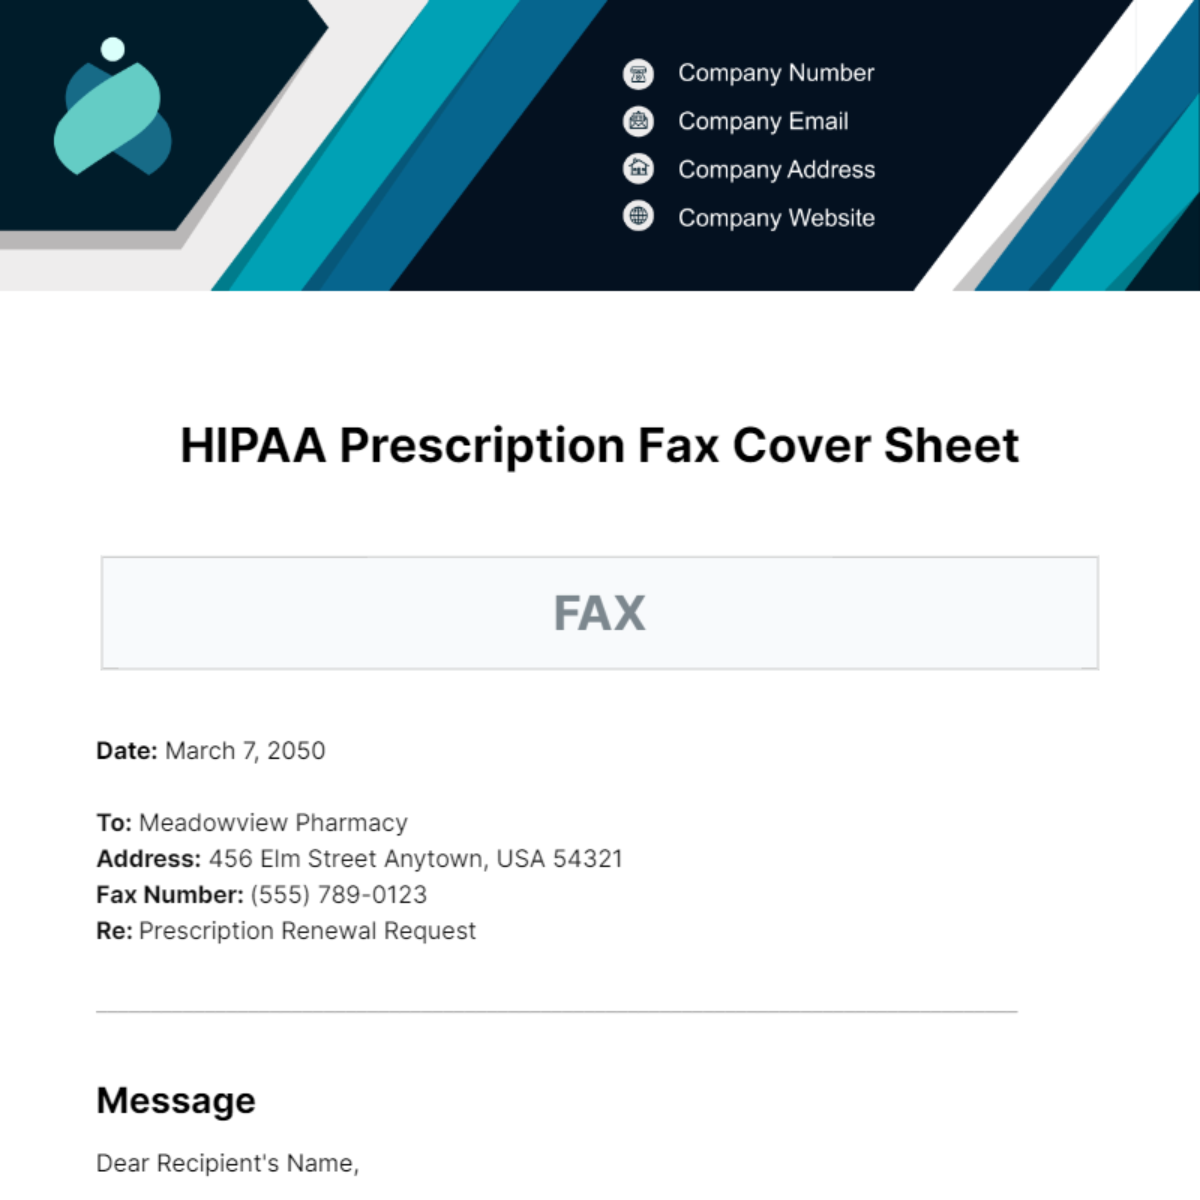 HIPAA Prescription Fax Cover Sheet